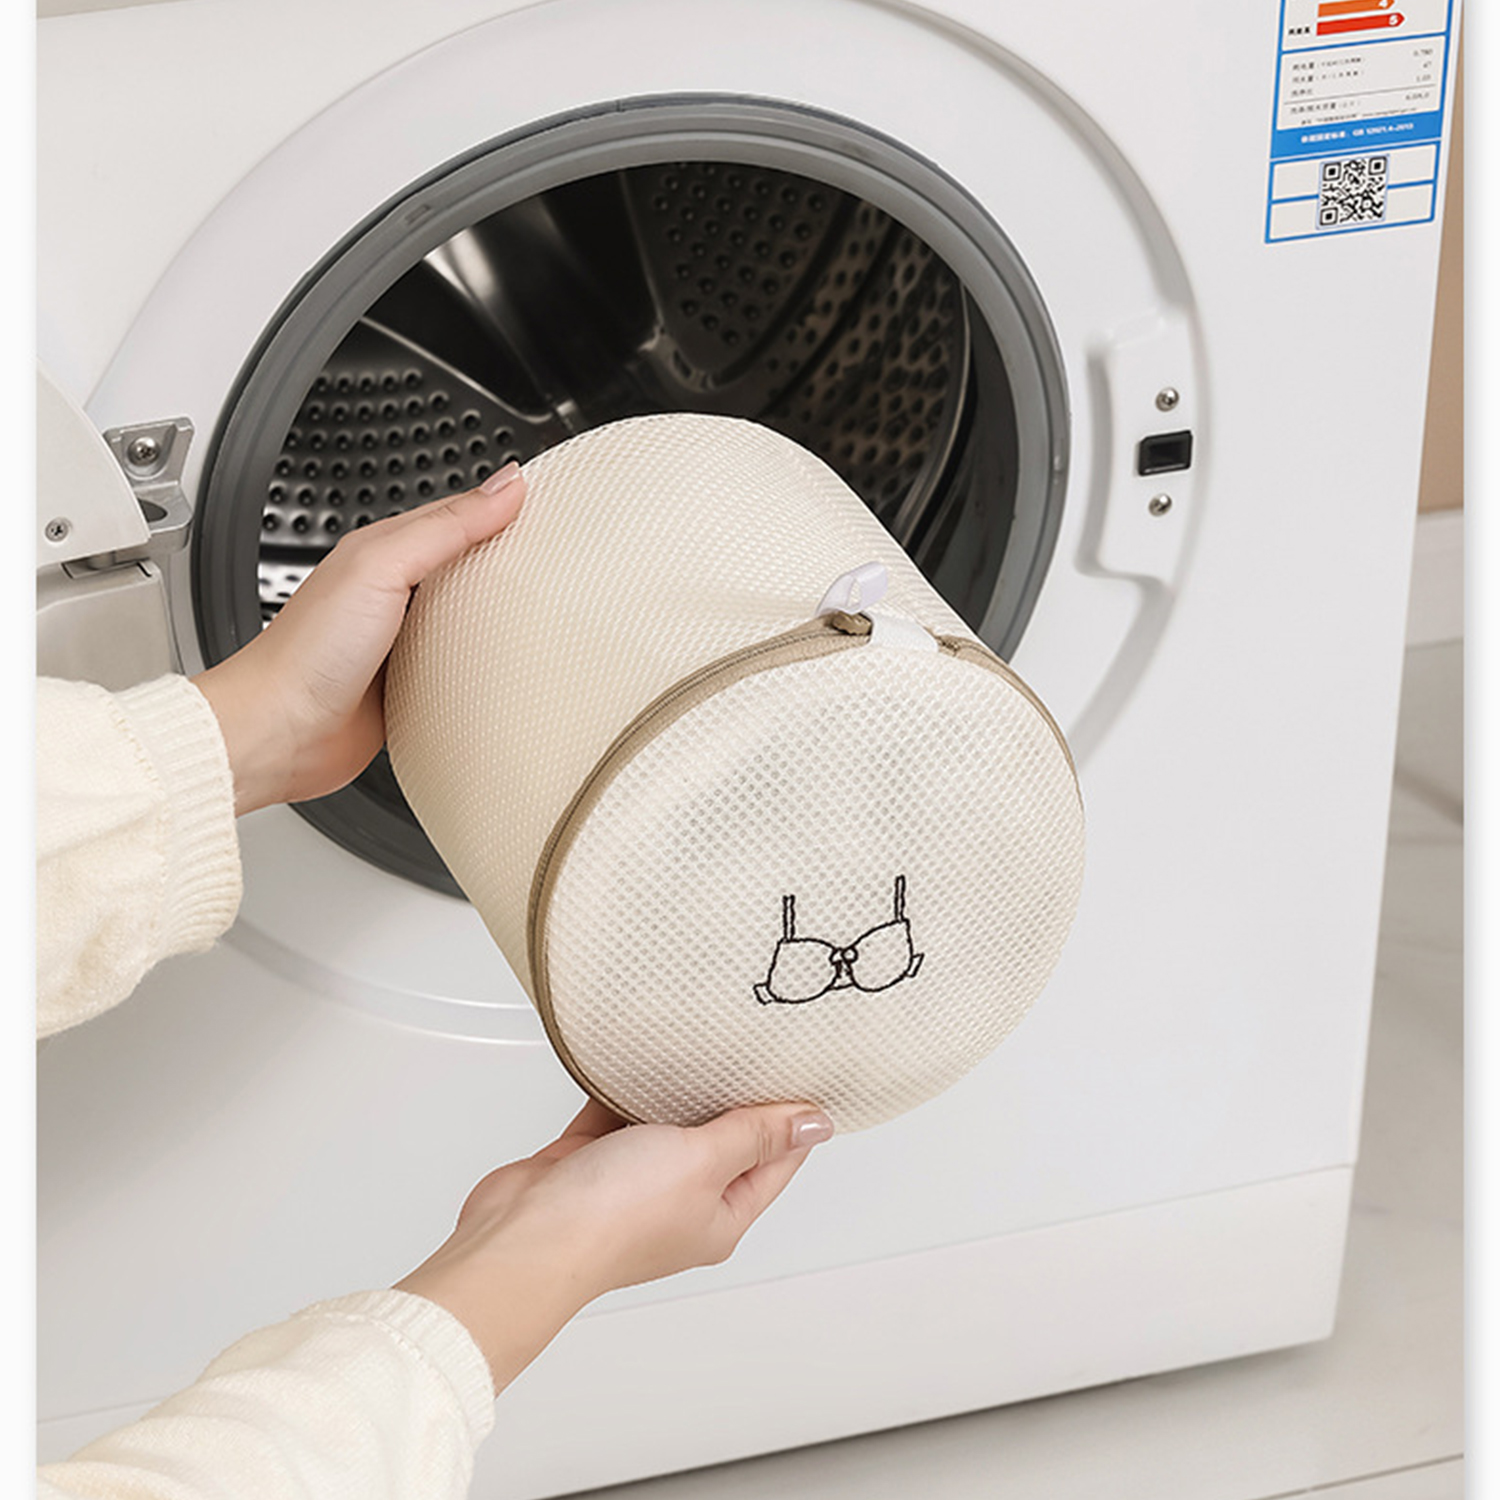 Mesh Laundry Bag Washing Machine Bag for Underwear, Lingerie, Bra